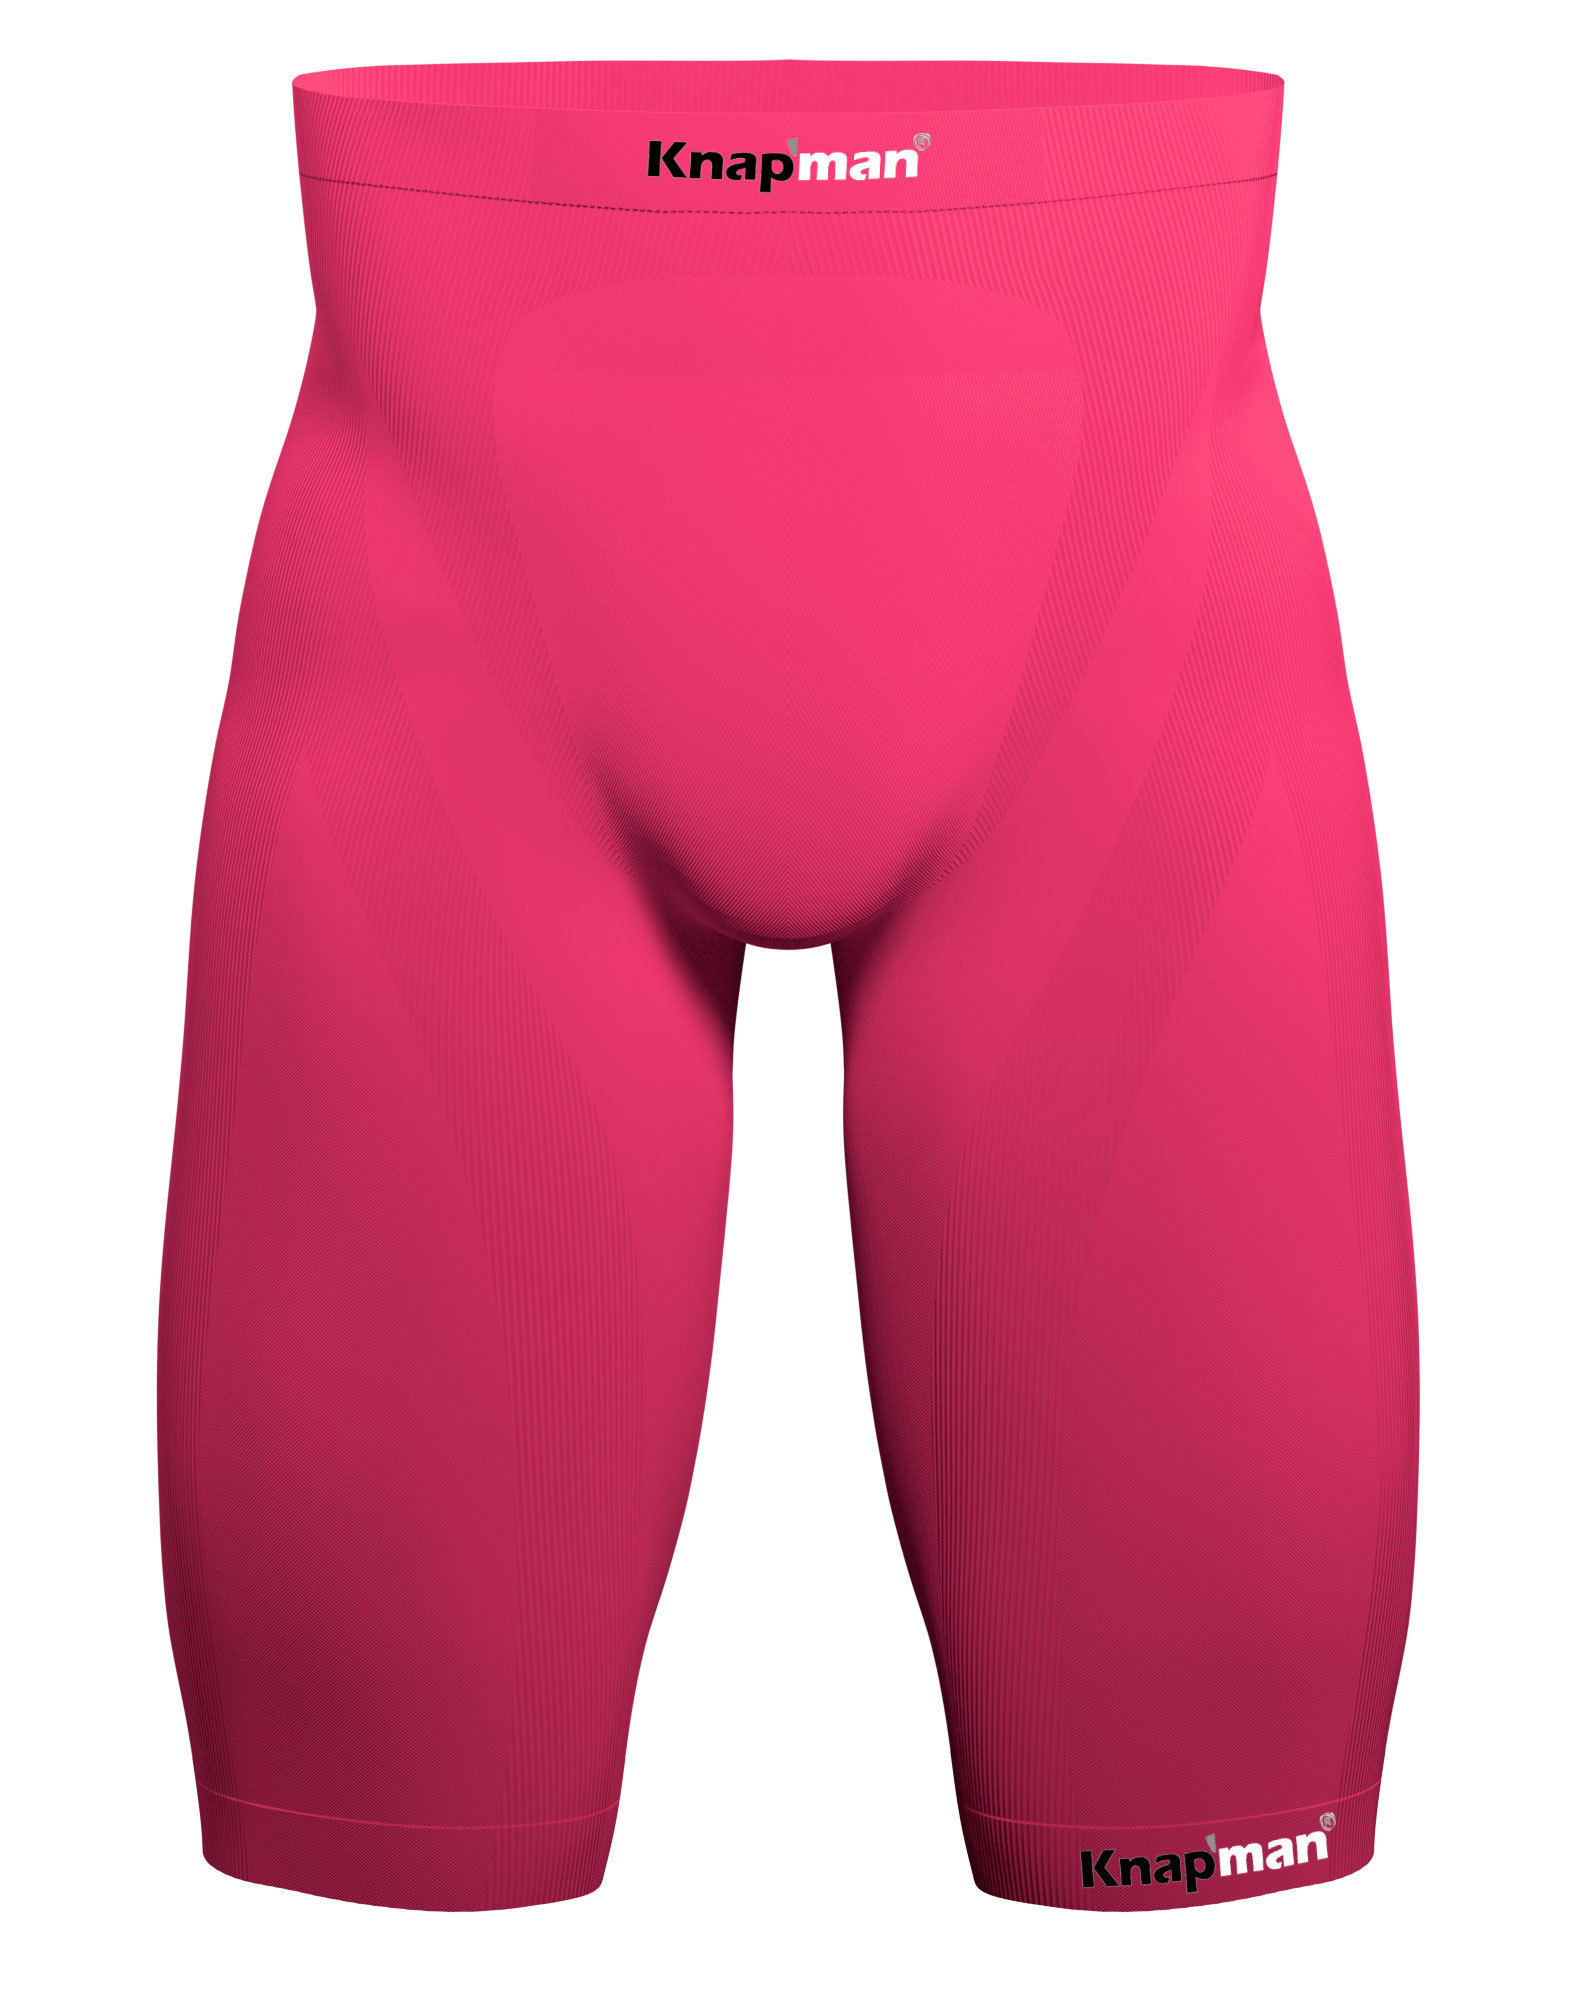 Knap'man Zoned Compression Shorts USP 45% Pink